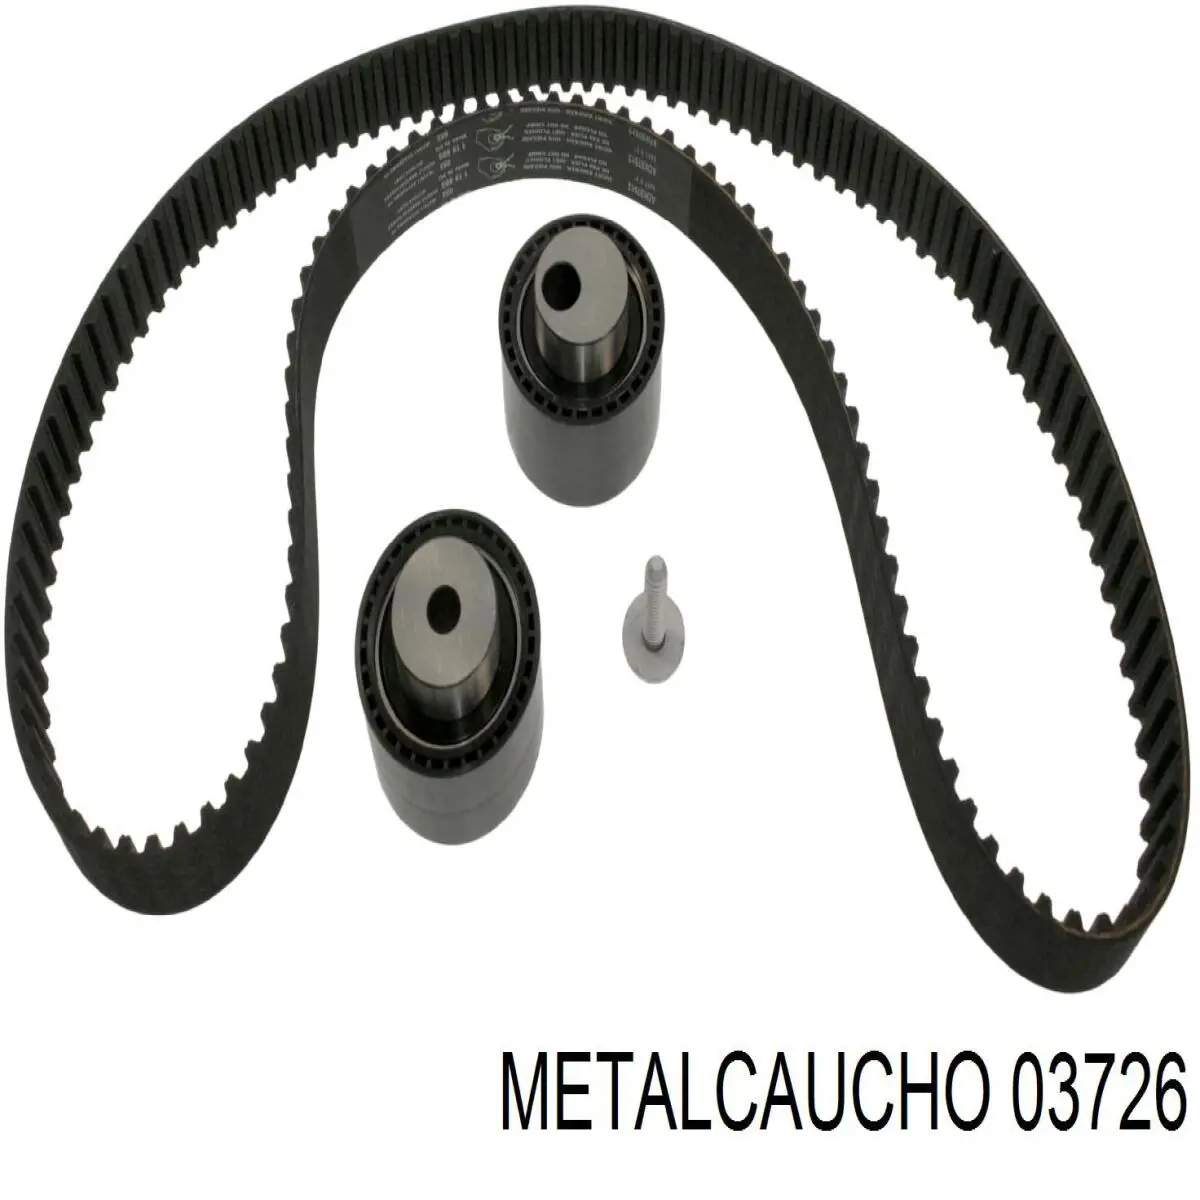 03726 Metalcaucho корпус термостата